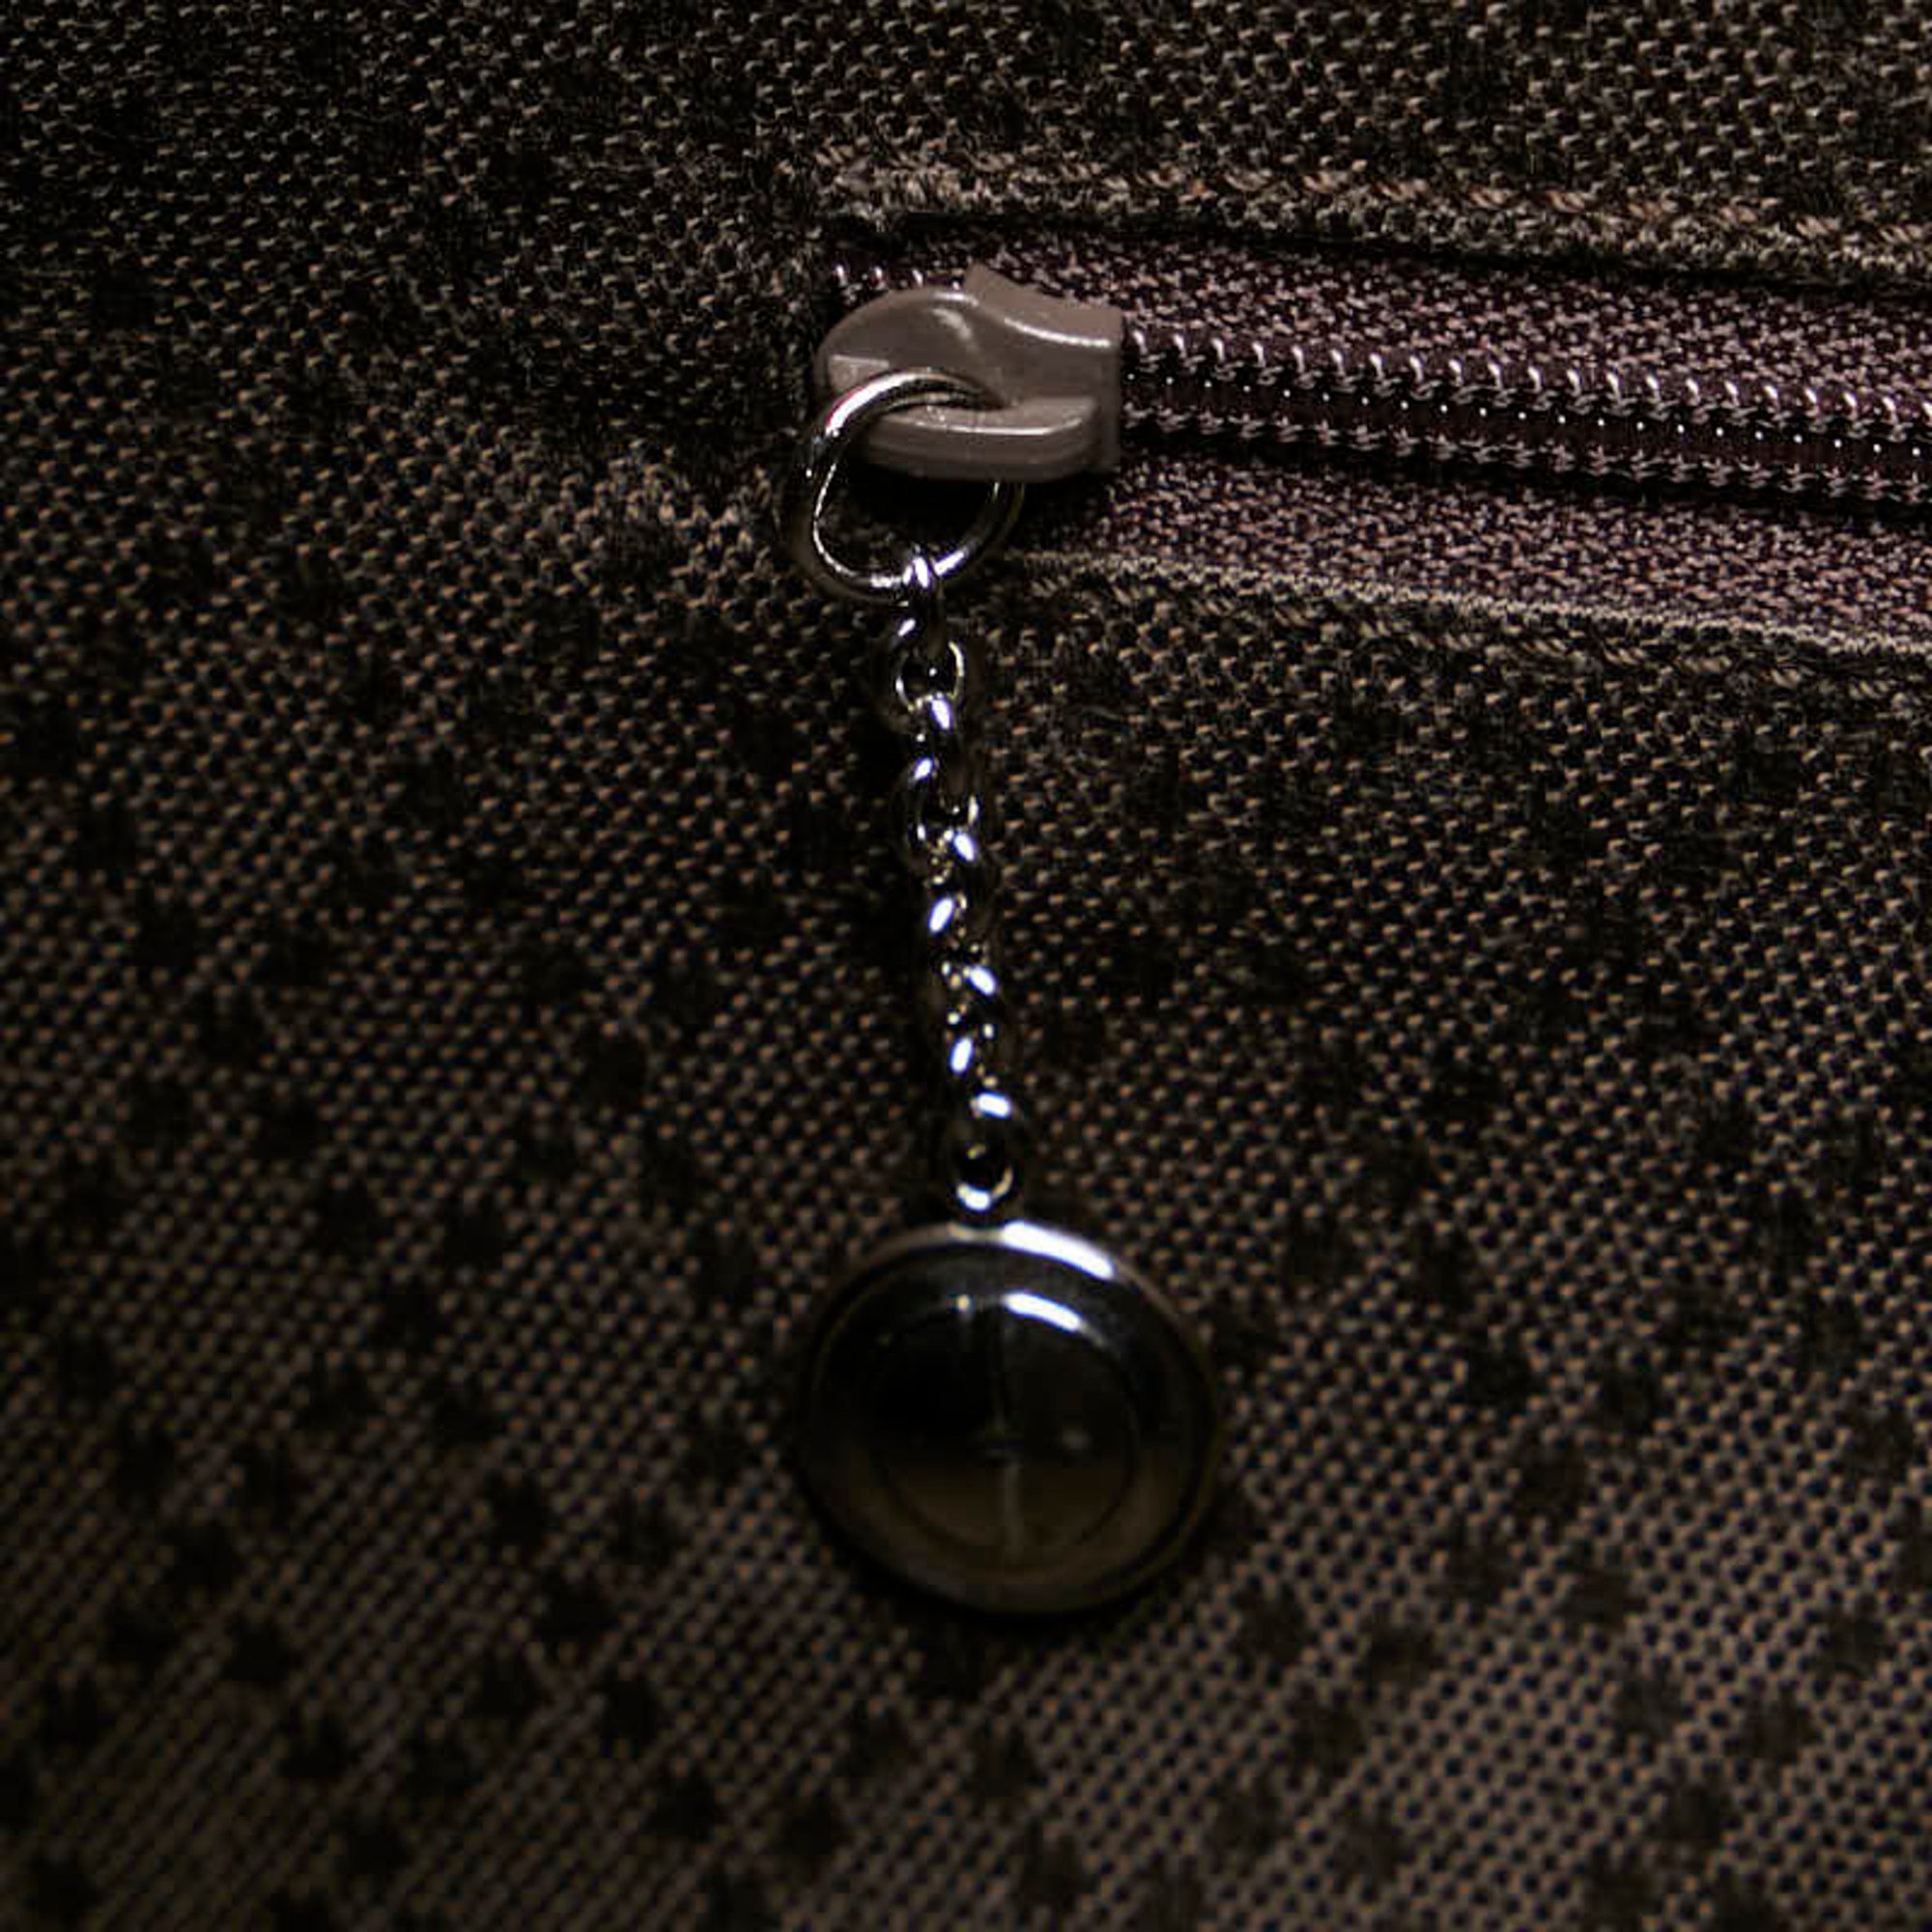 Gucci Handbag Bag 001 1955 Brown Nylon Leather Women's GUCCI